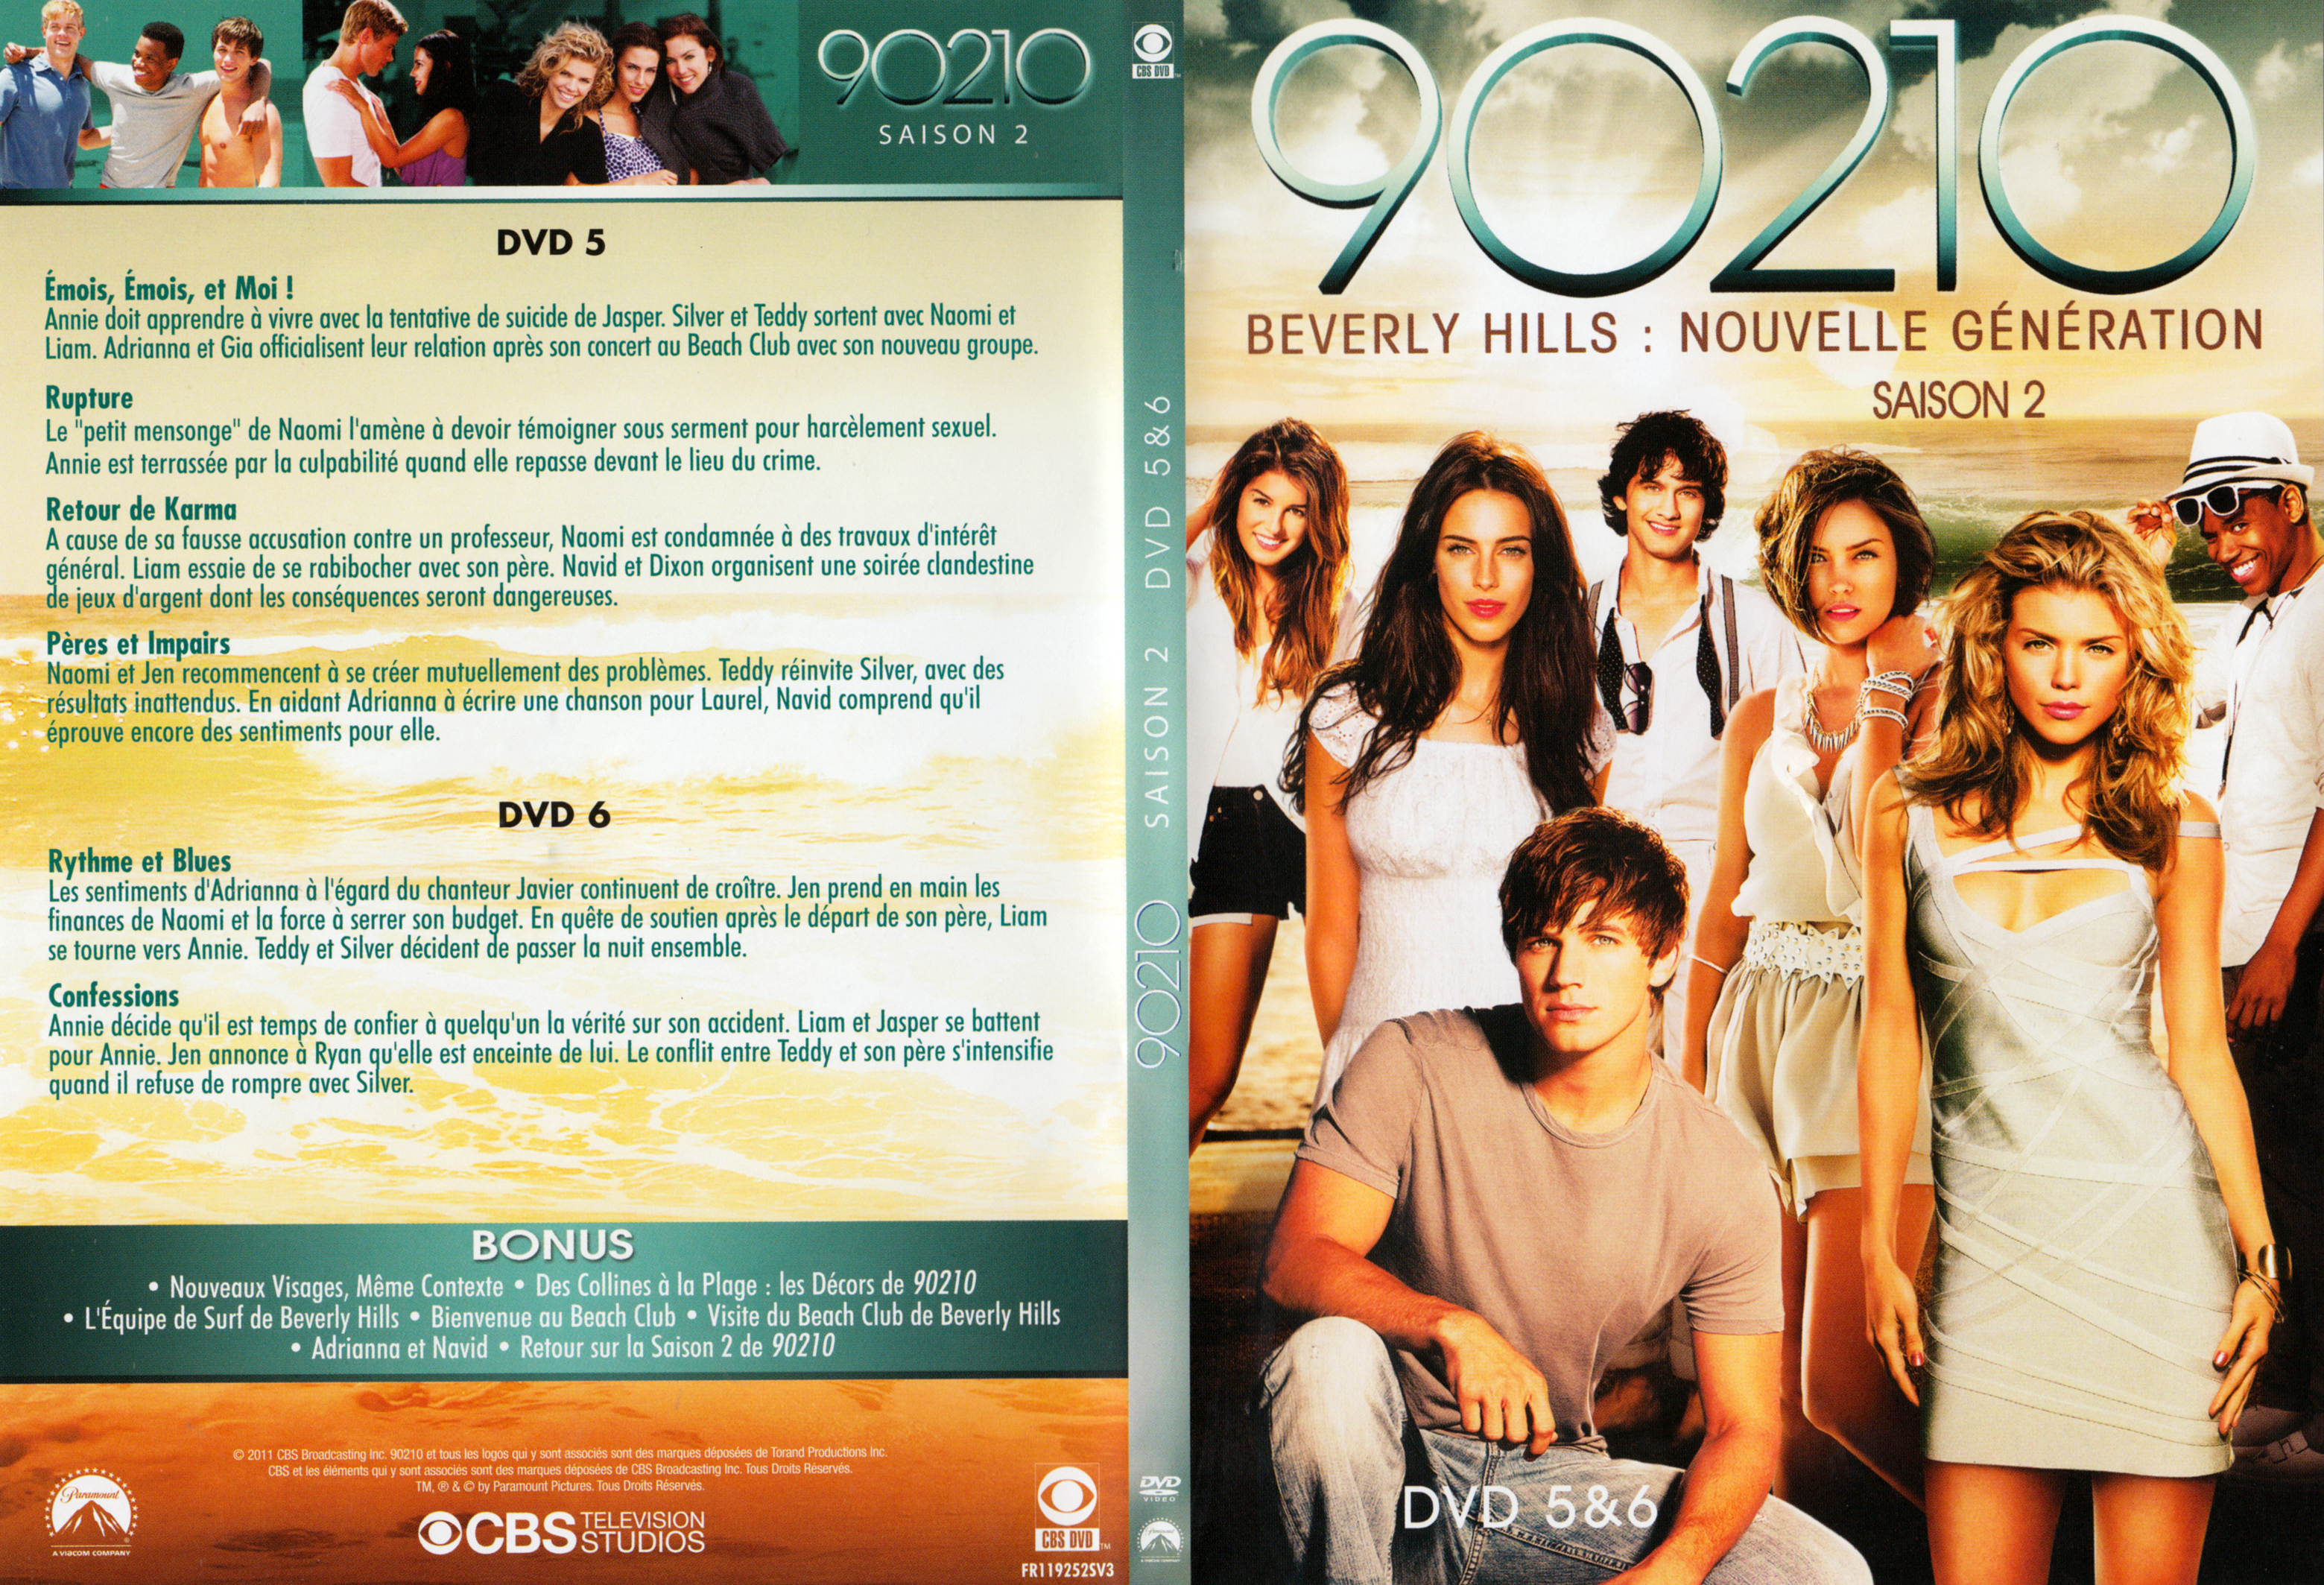 Jaquette DVD 90210 Saison 2 DVD 3